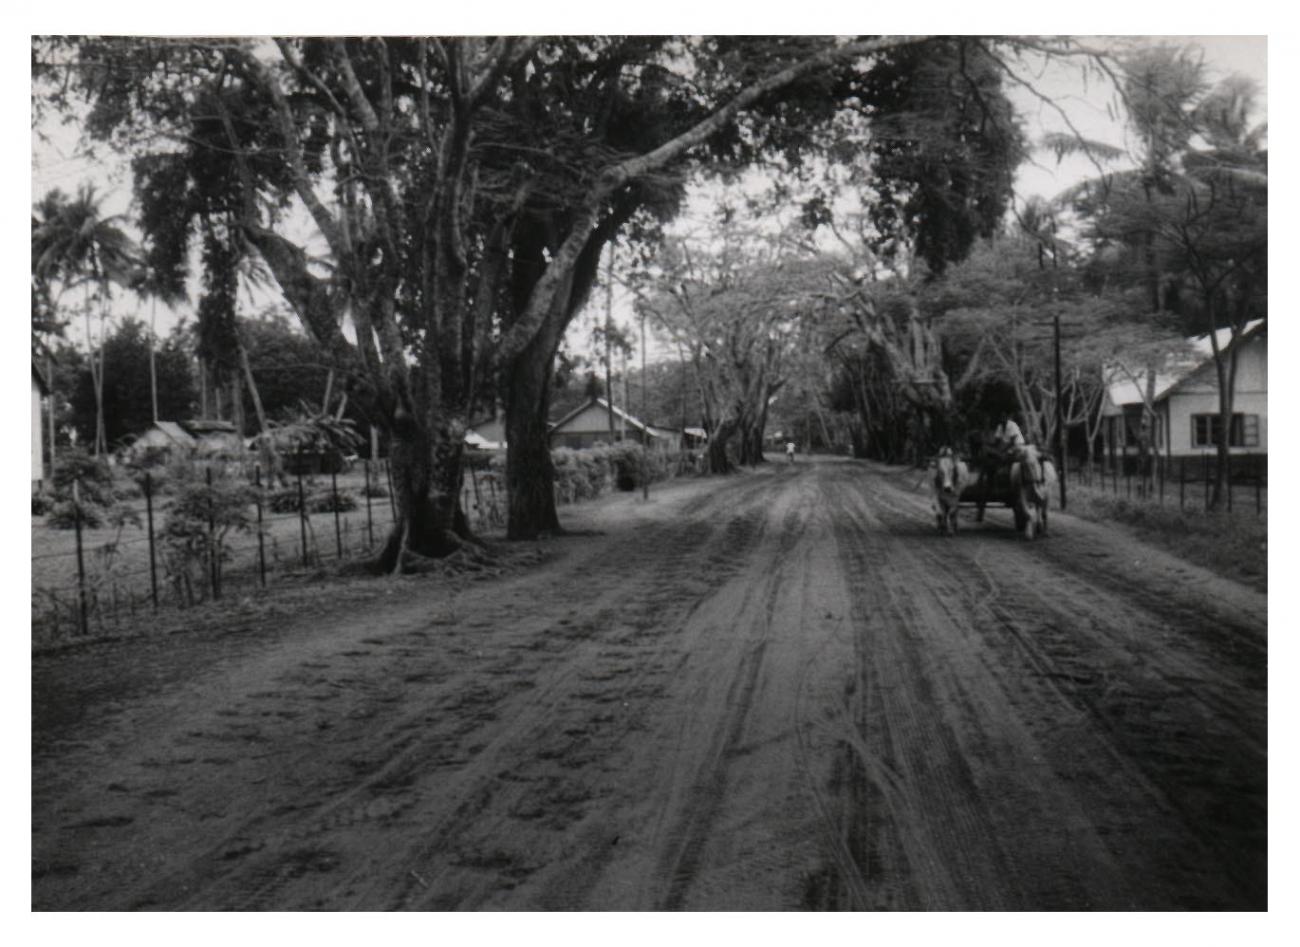 BD/54/39 - 
Merauke, unpaved road with cart
